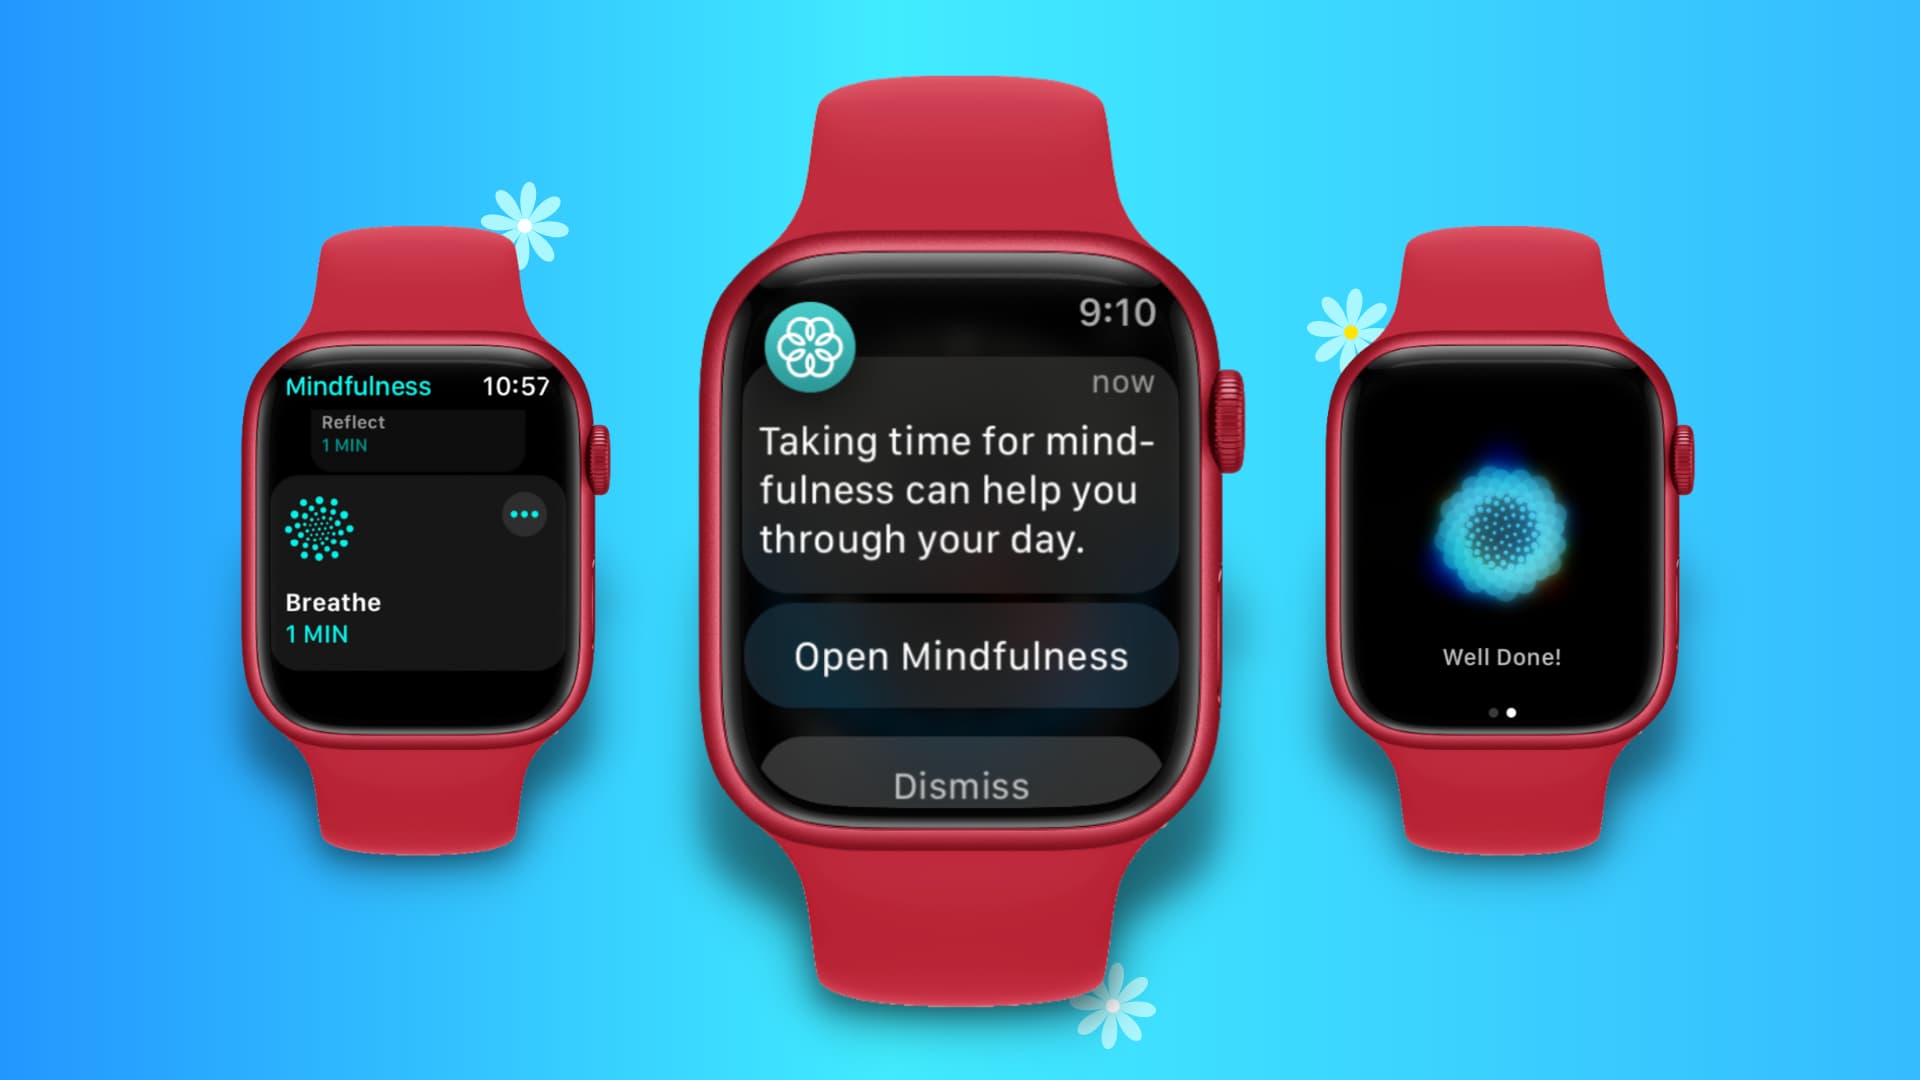 Open Mindfulness notification on Apple Watch